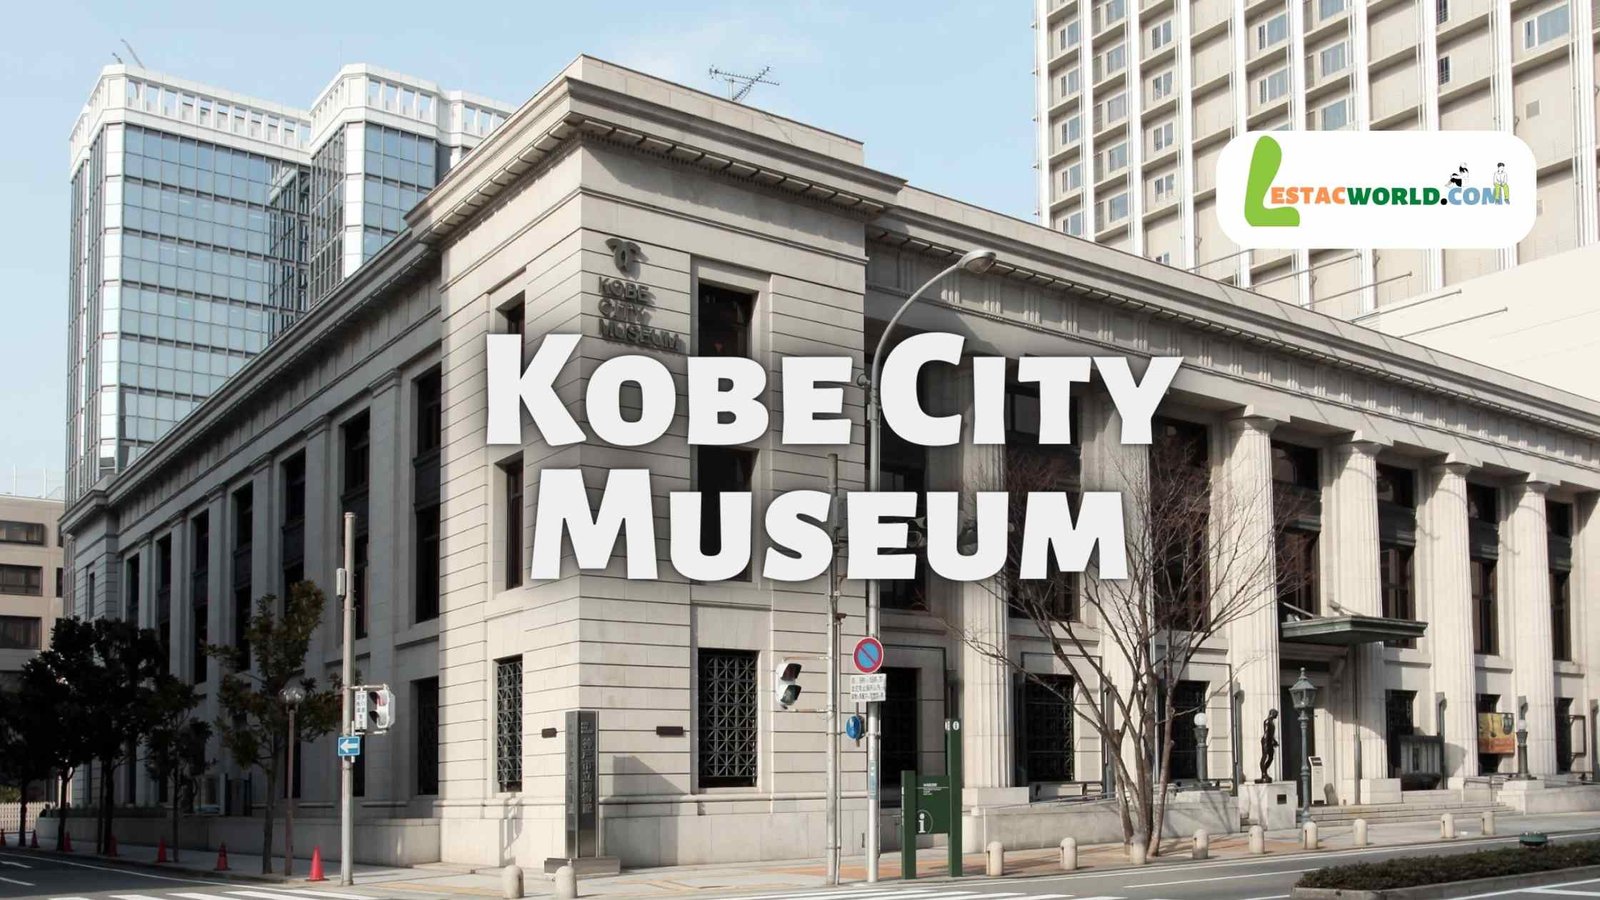 About Kobe City Museum